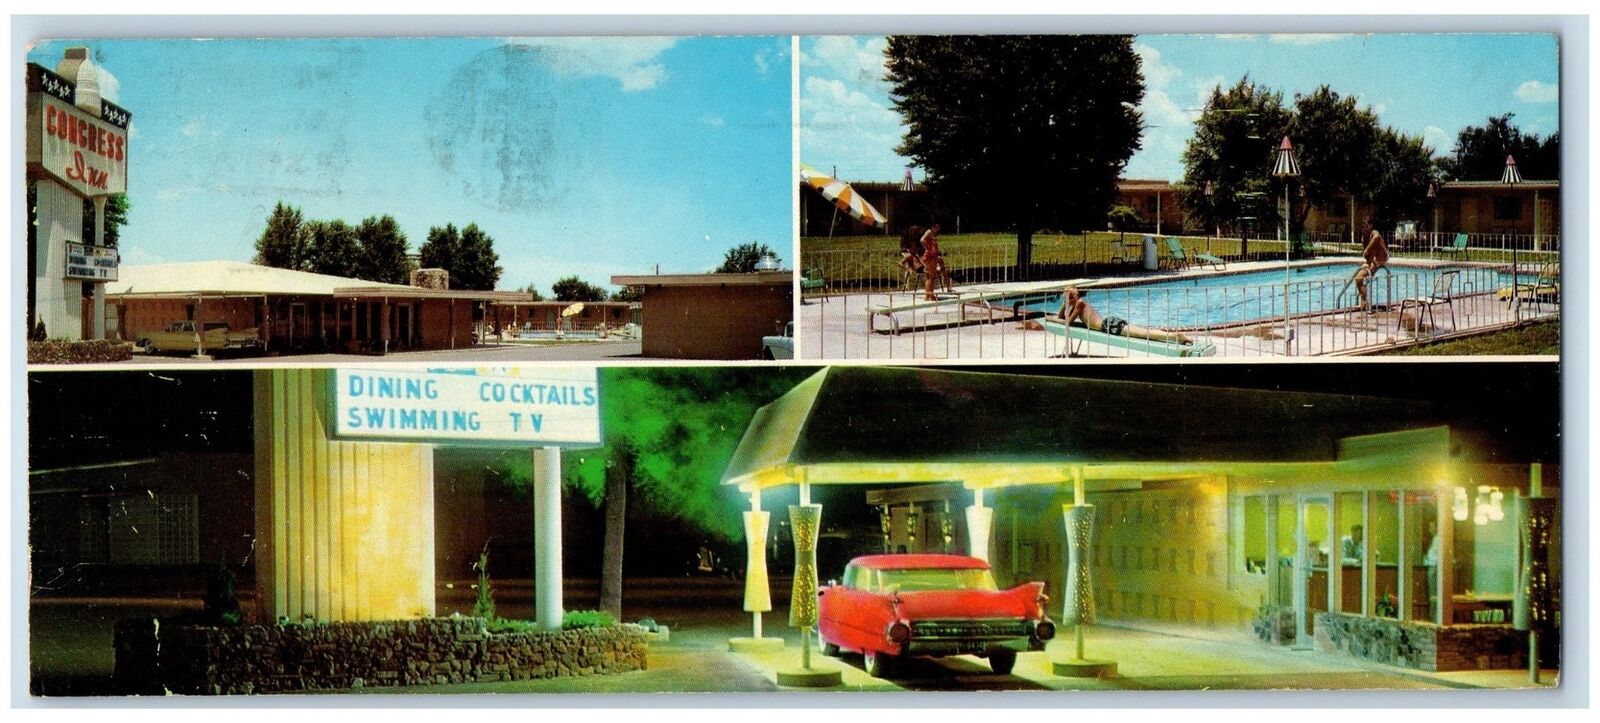 Tucumcari New Mexico Postcard Oversized Congress Inn Hotel Restaurant 1961 Cars